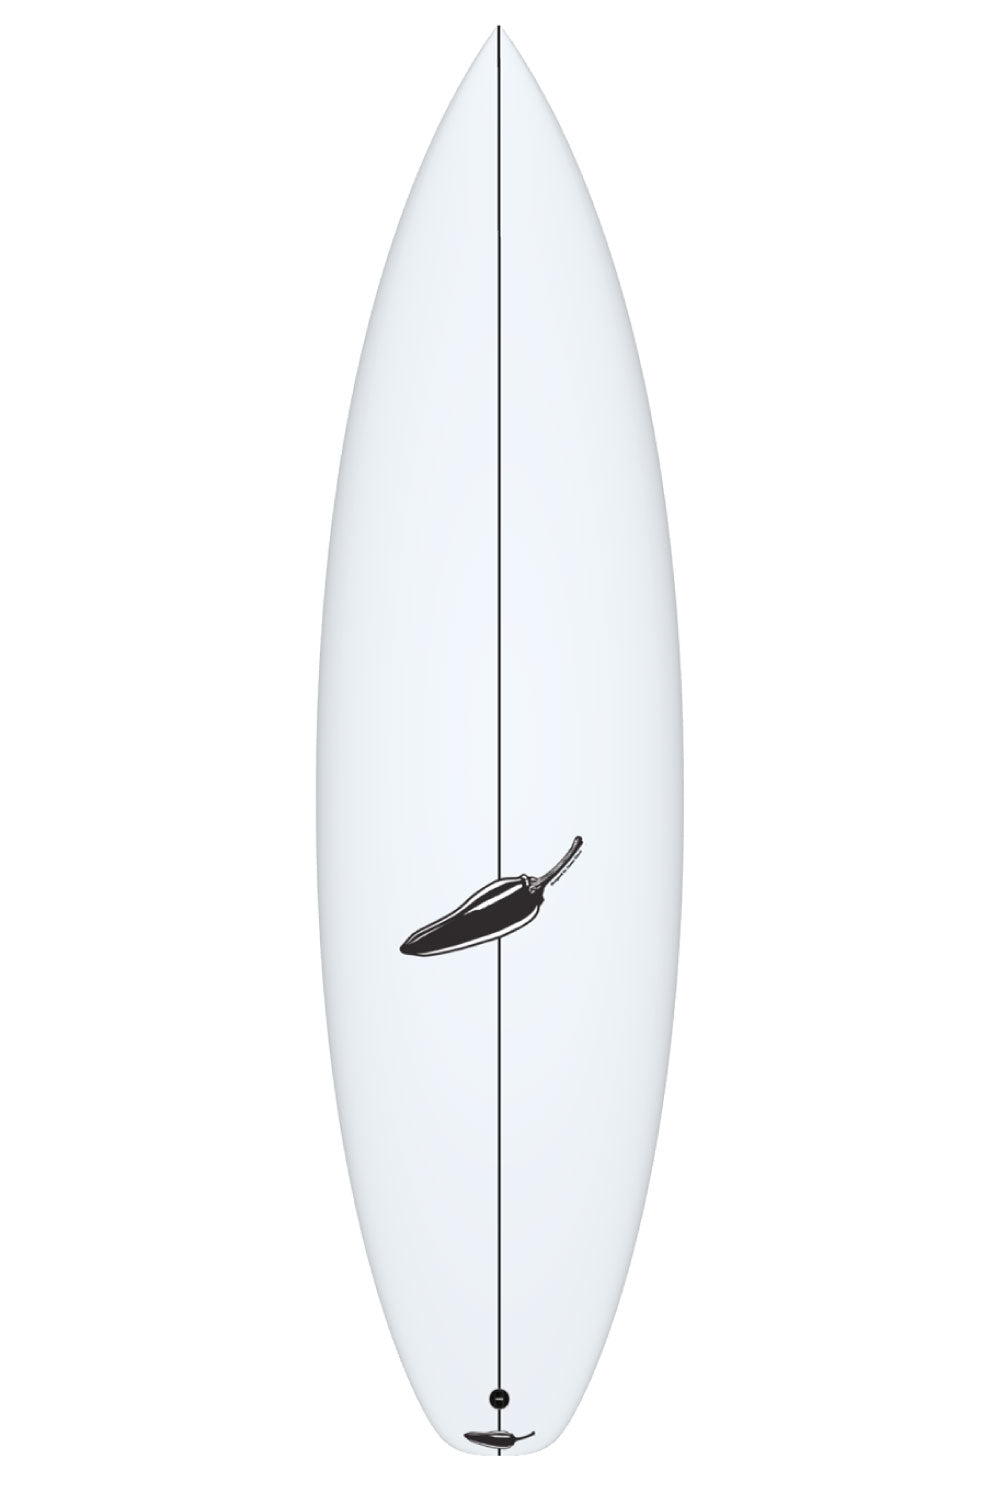 Chilli Shortie Surfboard - Squash Tail